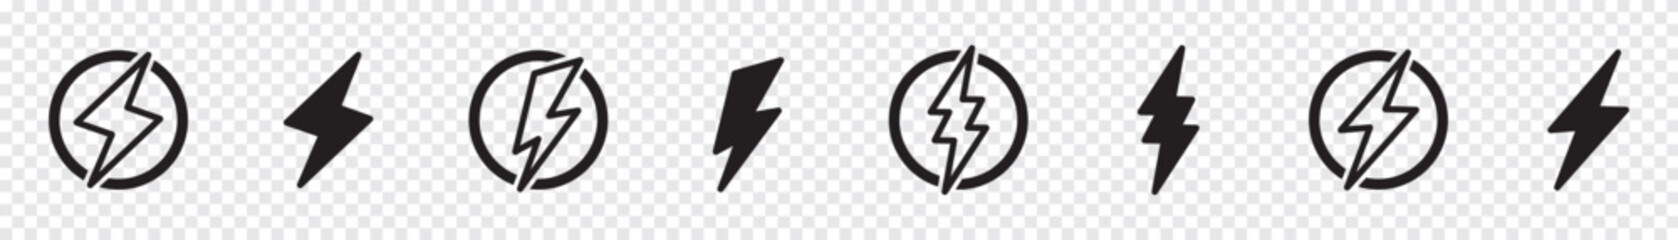 lightning bolt icon. flash lightning bolt symbol. Electric power. thunder bolt sign. Power energy sign with Transparent background. vector illustration